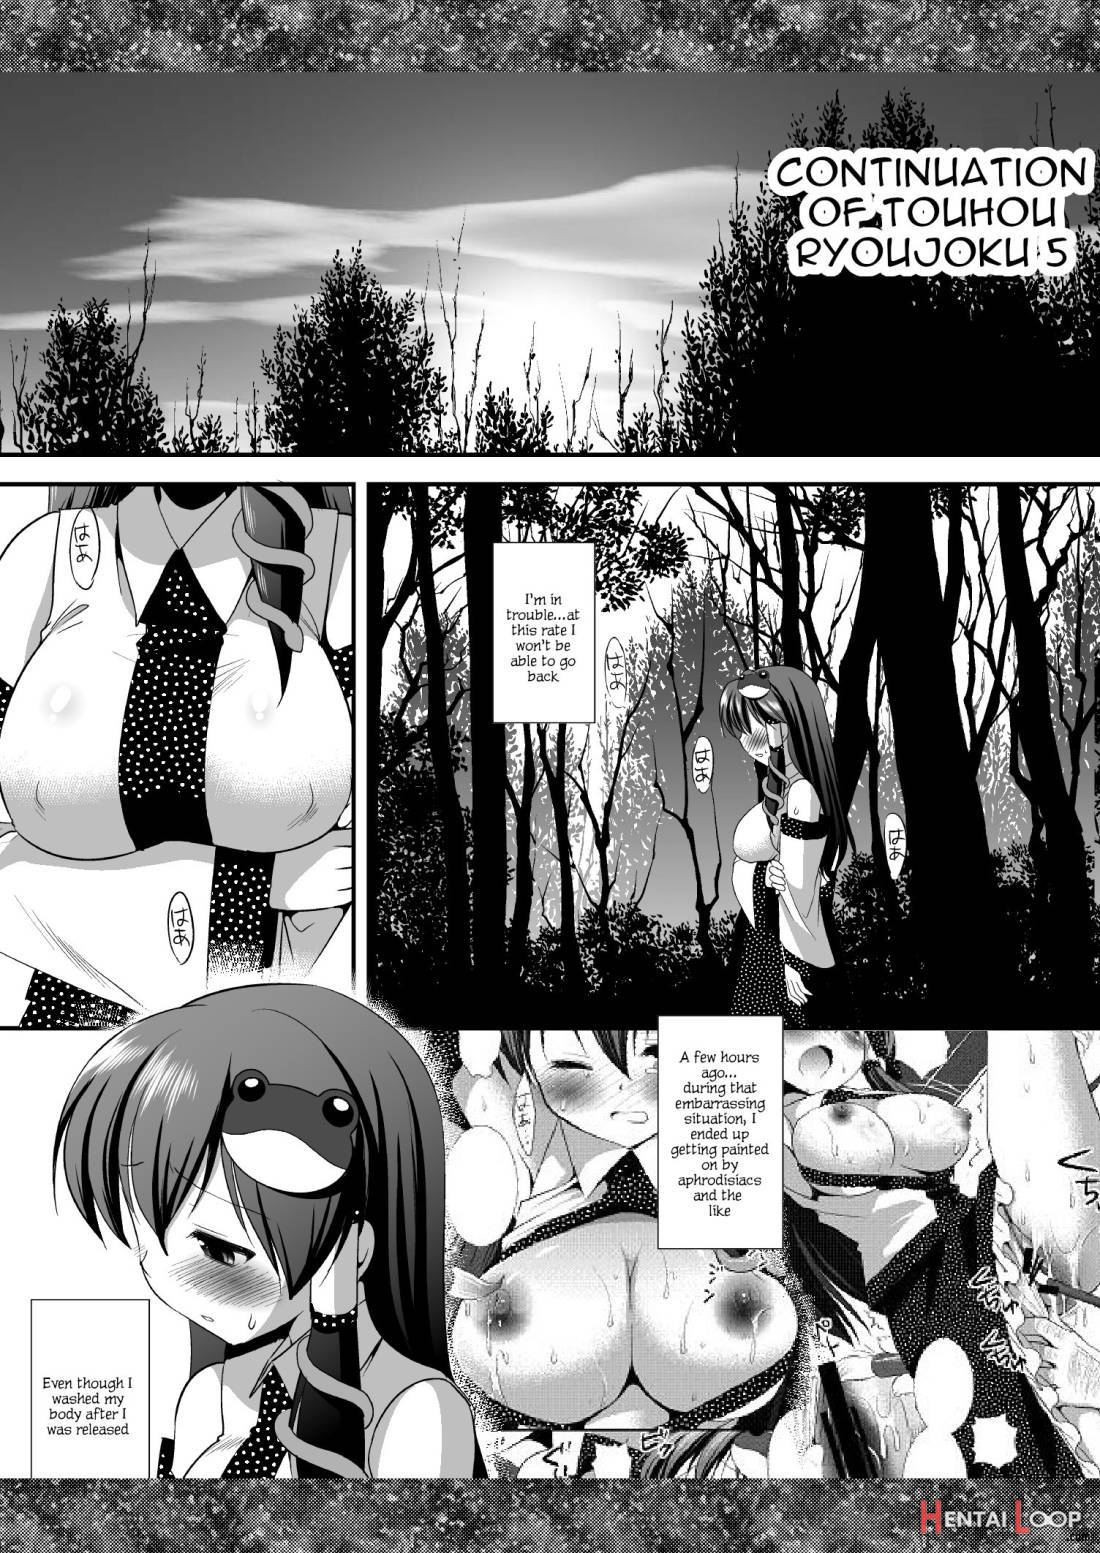 Touhou Ryoujoku 7 page 2